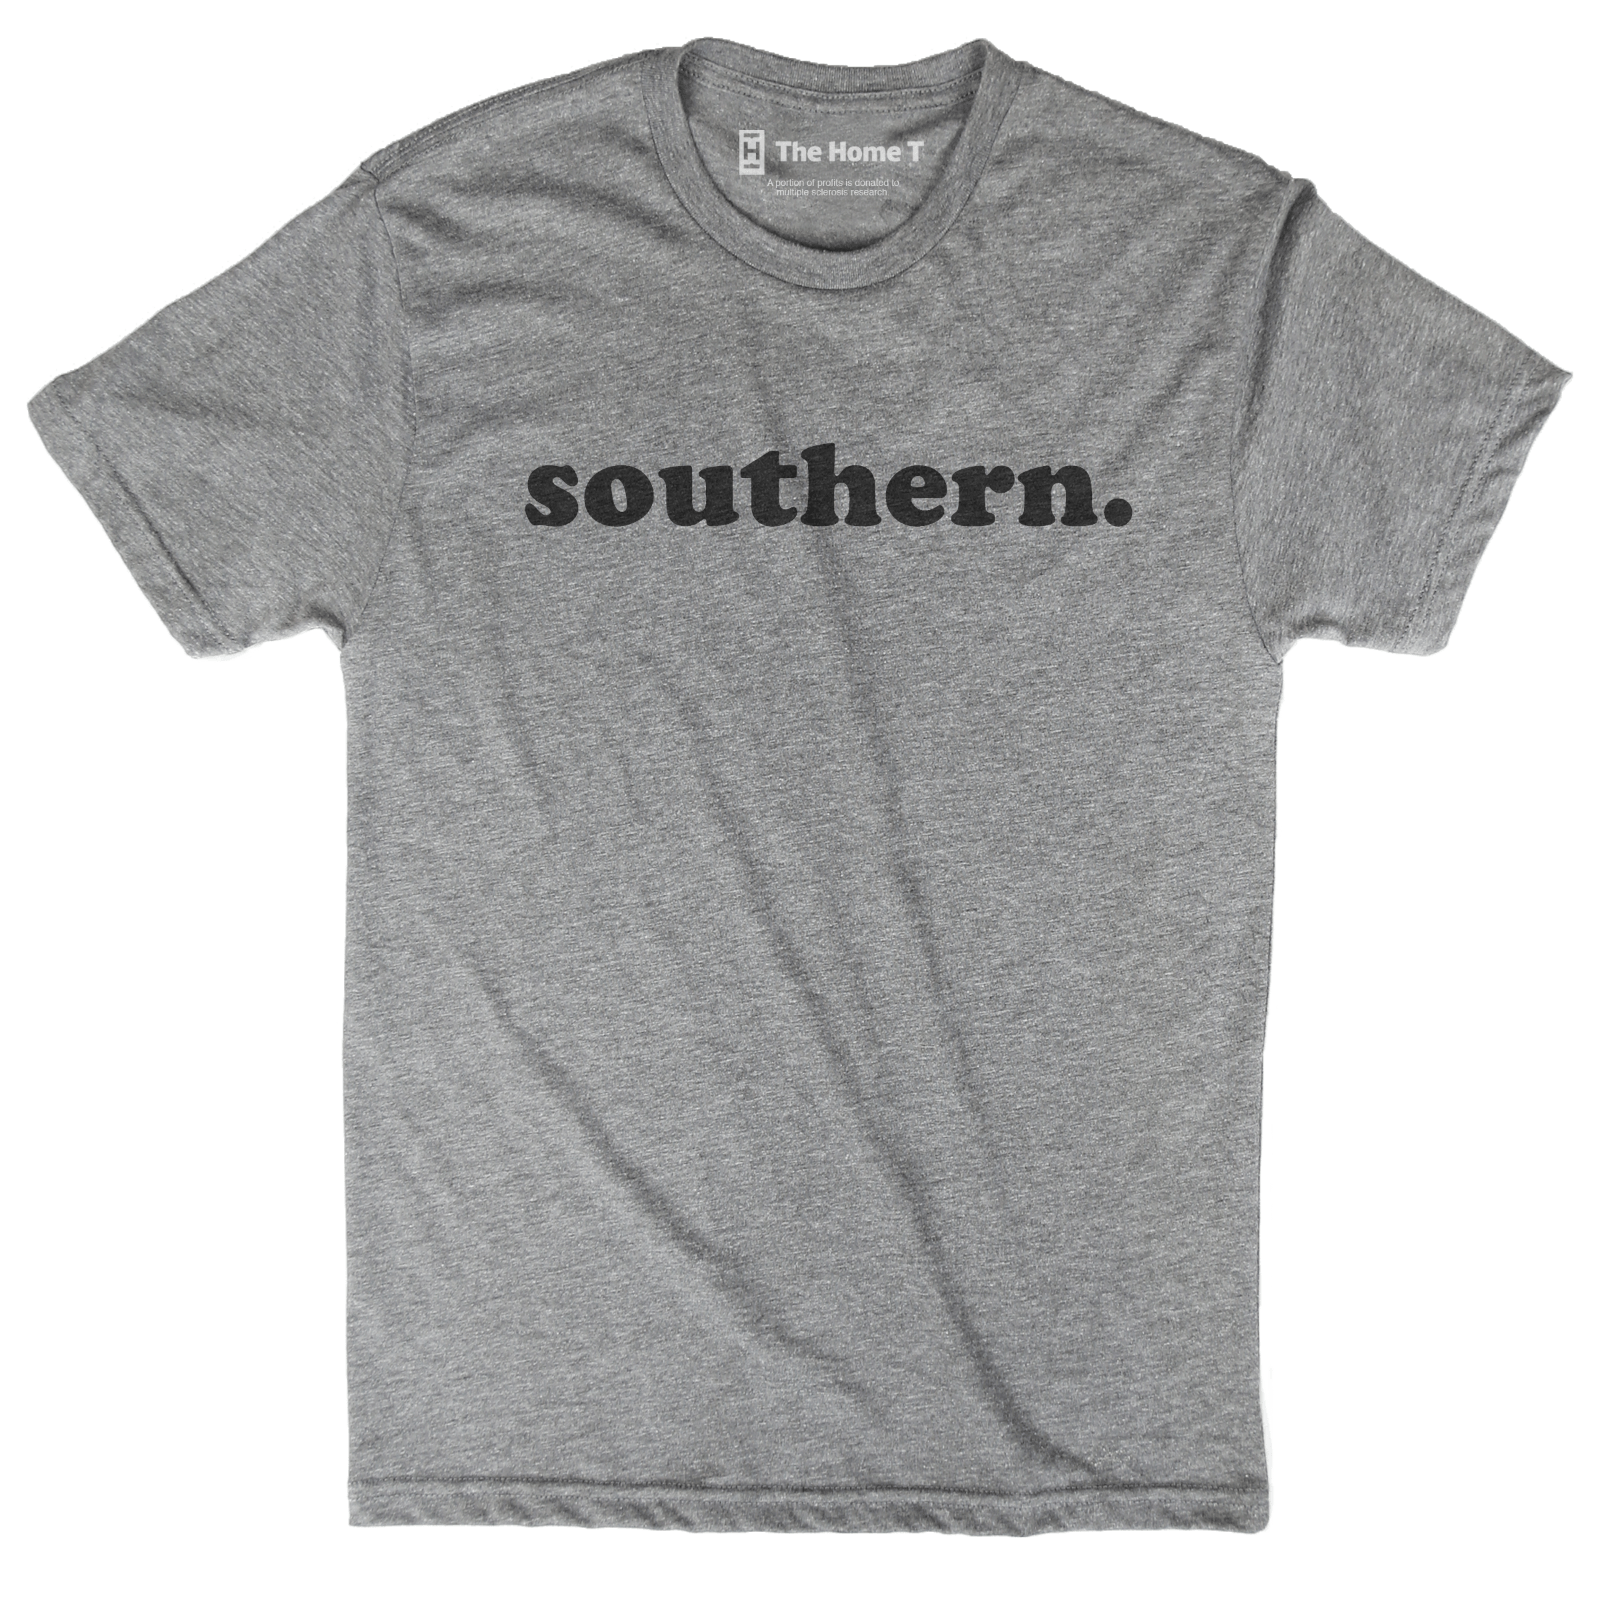 Southern.